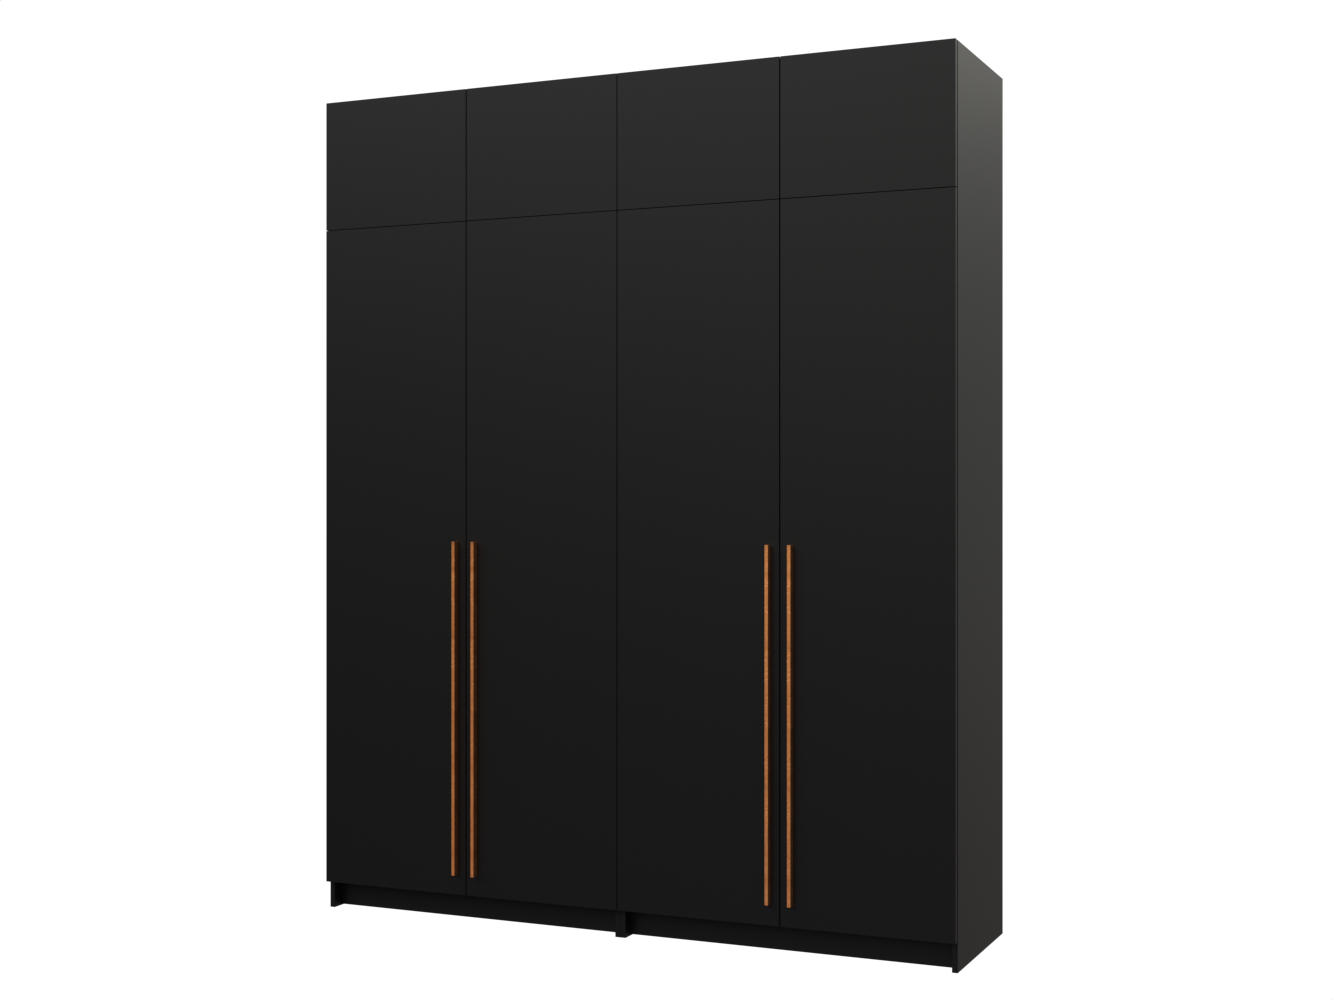 Распашной шкаф Пакс Фардал 66 black ИКЕА (IKEA) изображение товара